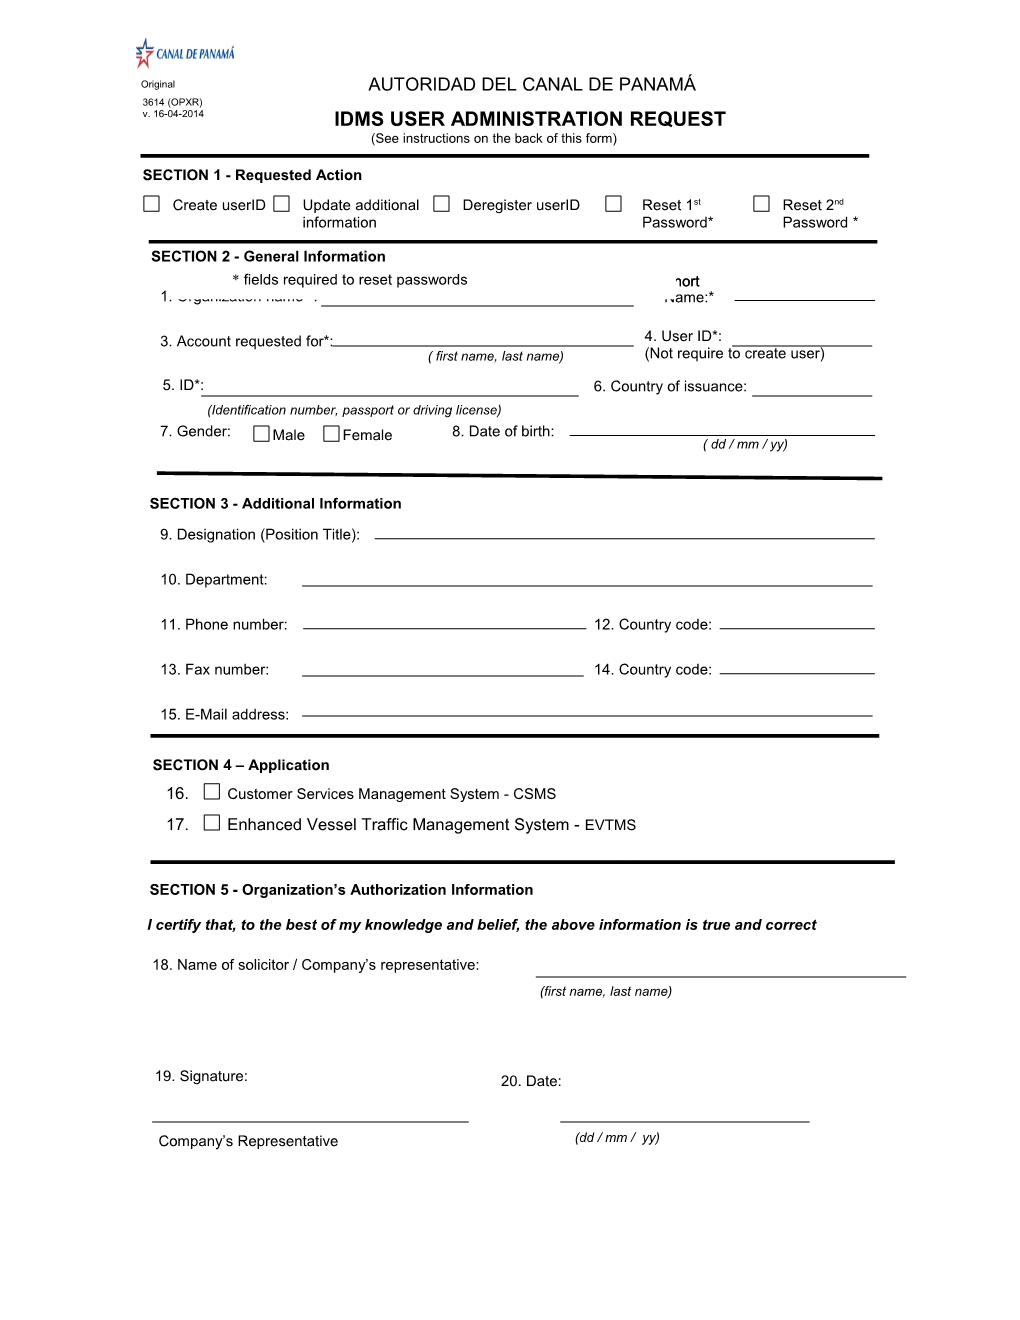 CSMS External Administrator's Registration Form